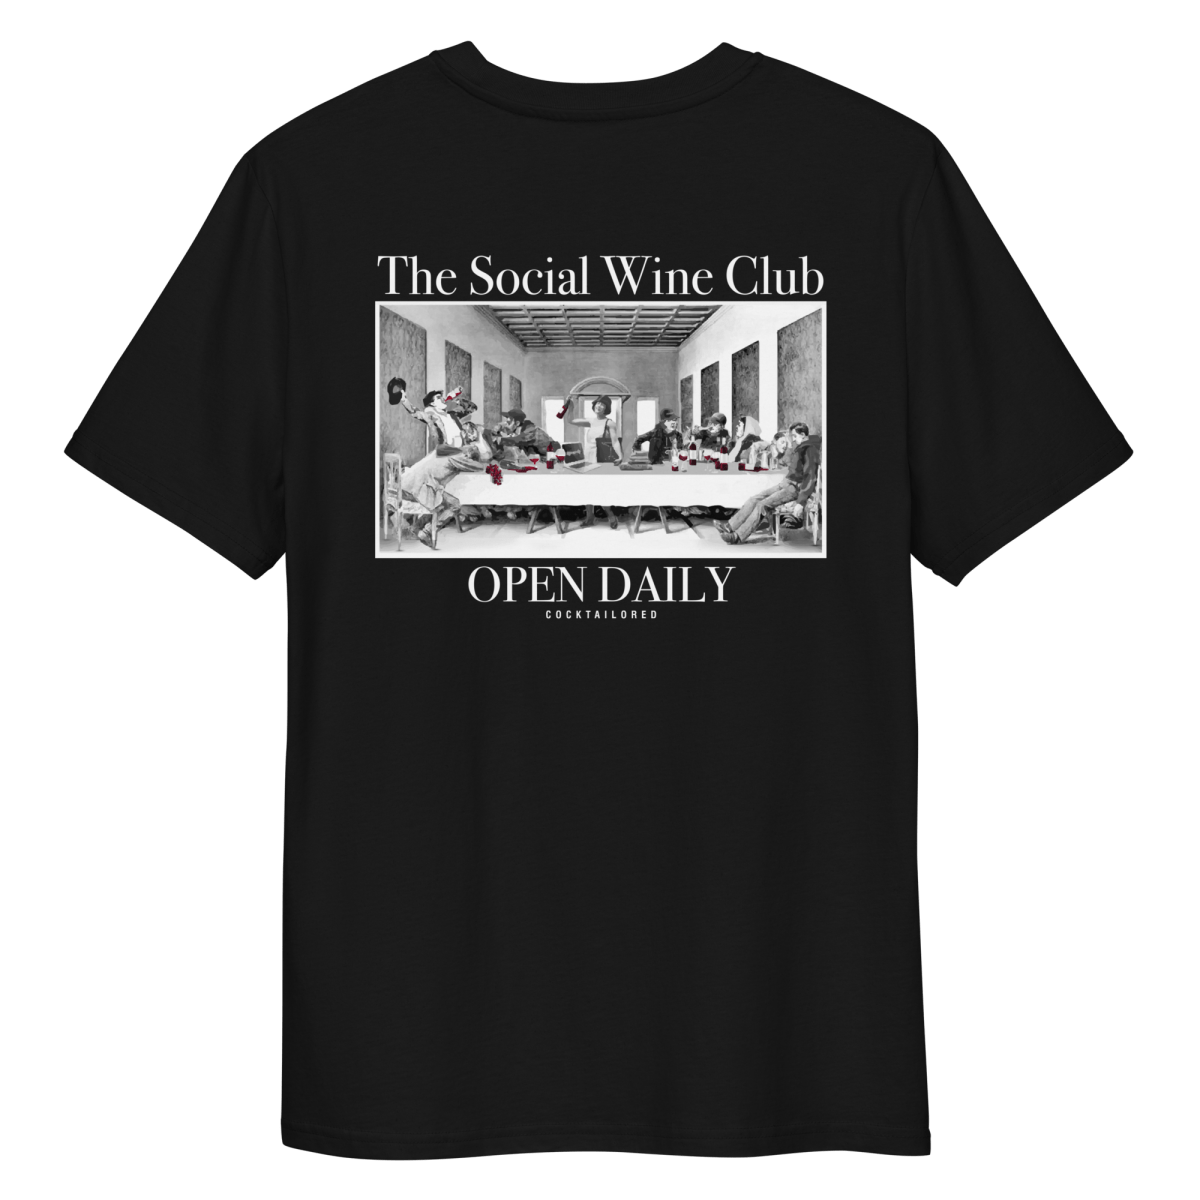 The Social Wine Club. Organic T-shirt